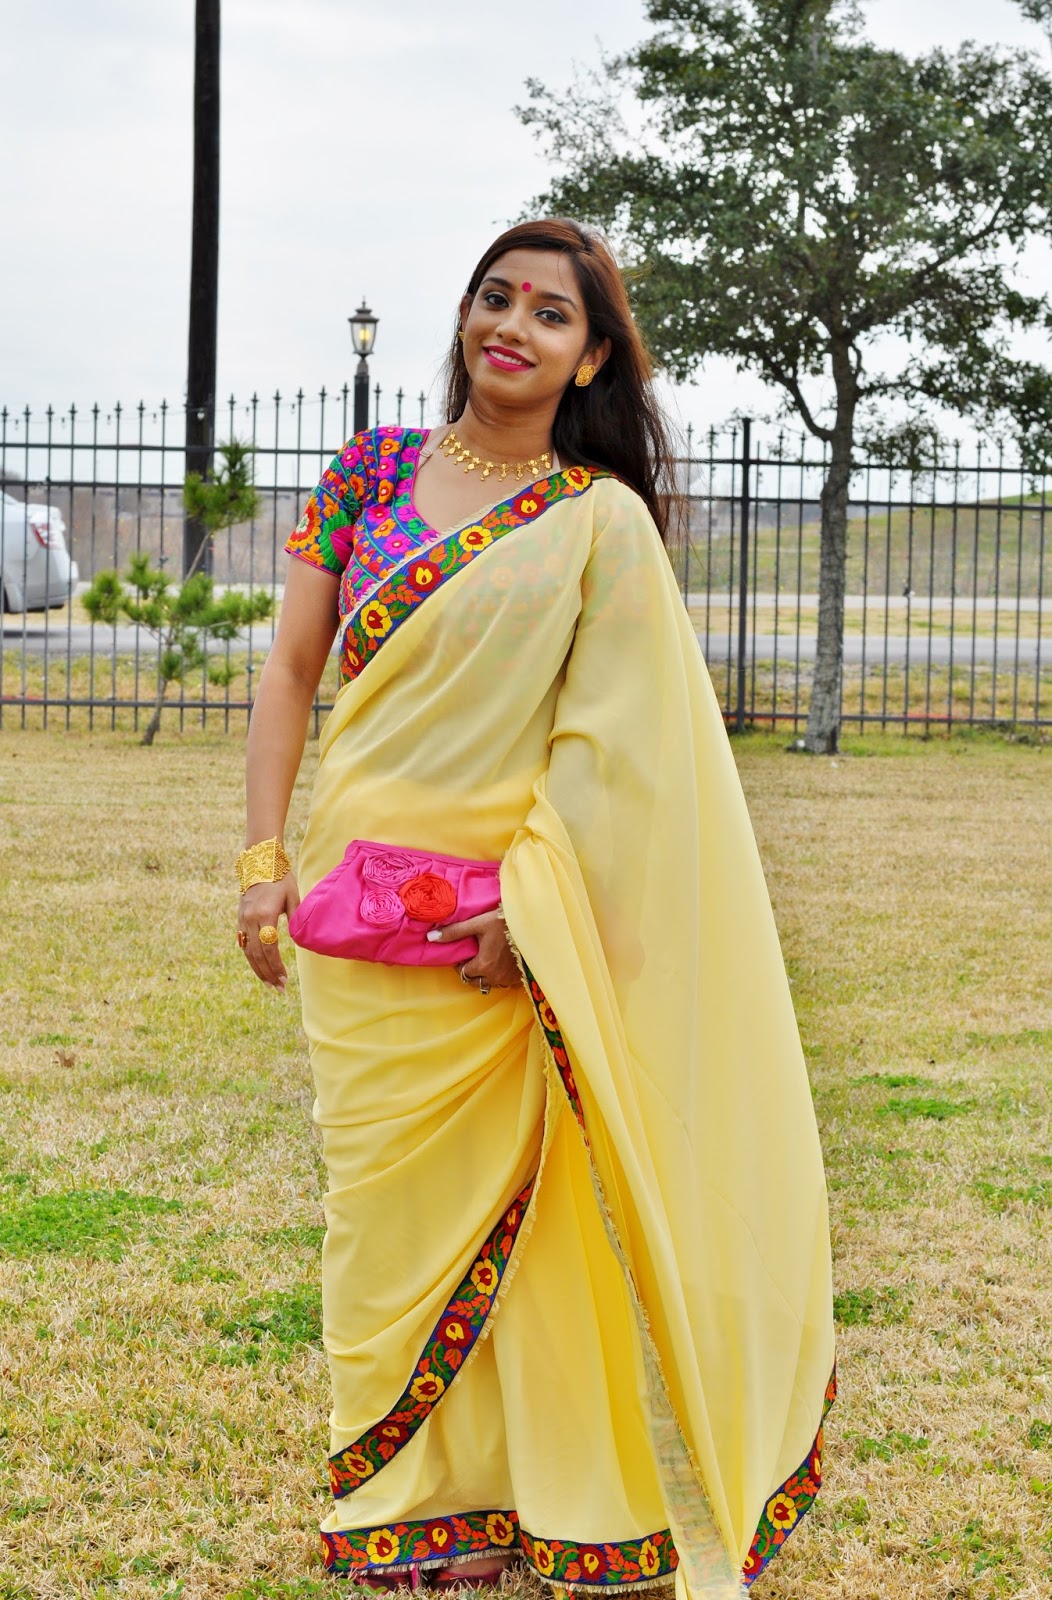 Rumela The Shopaholic Saree Styling And Saraswati Puja -9645